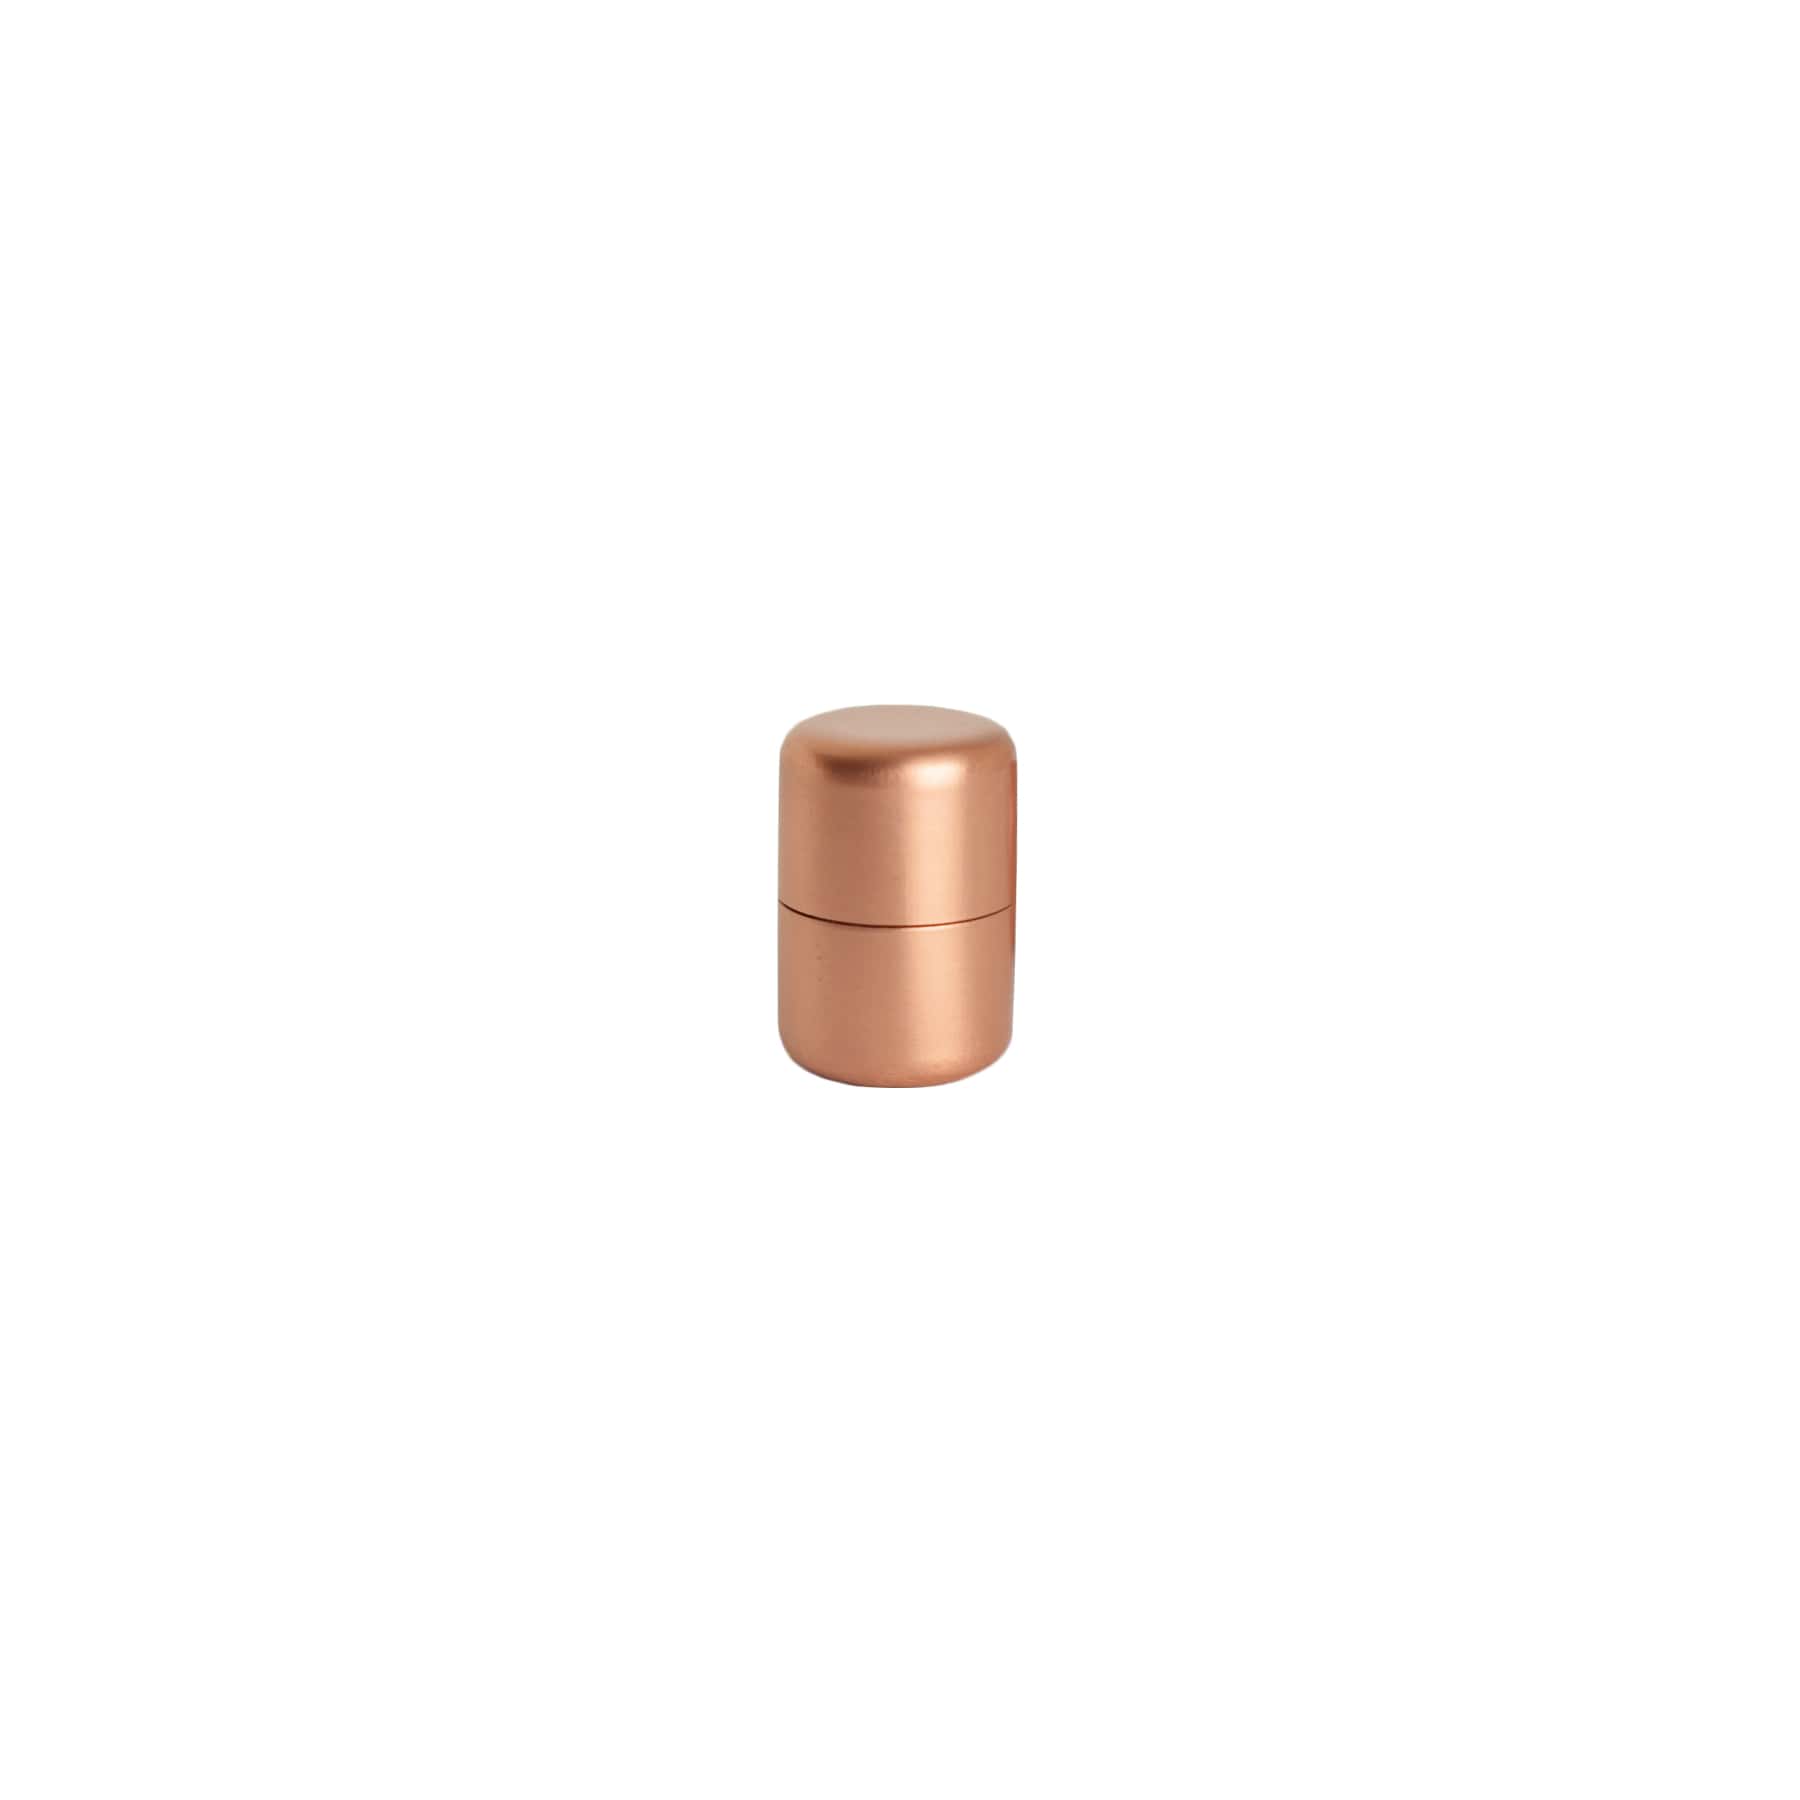 Copper Knob - White Background